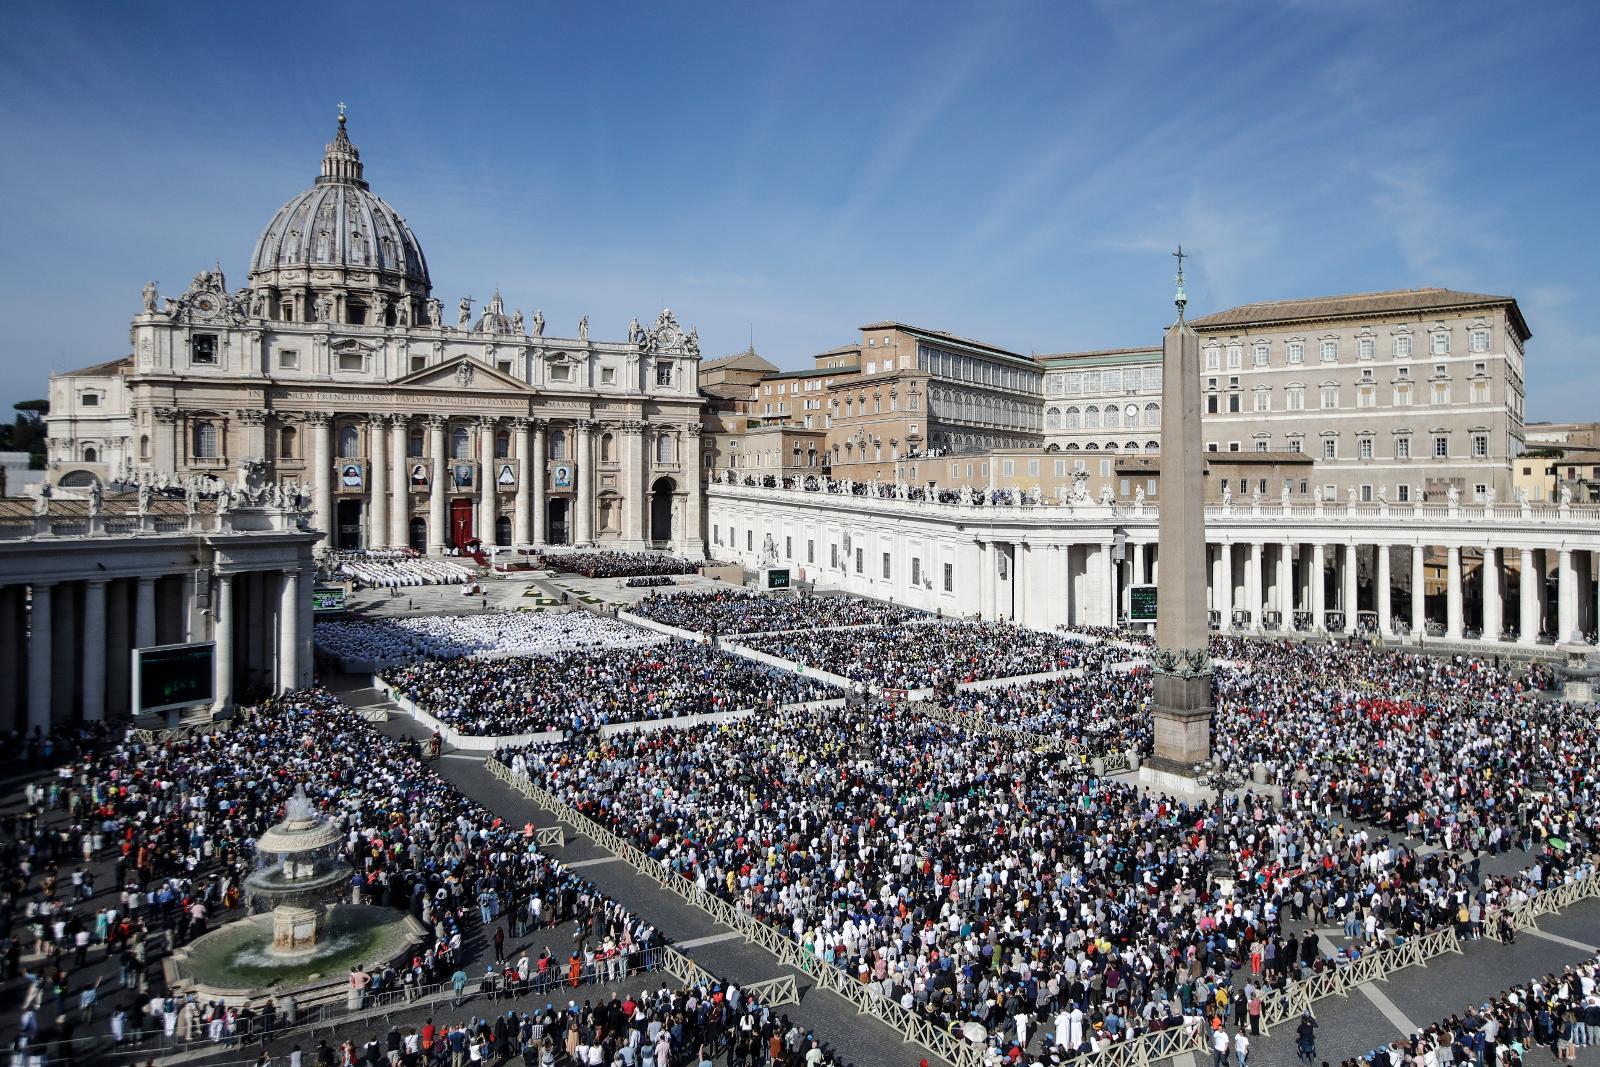 Vatikanen i ekonomisk kris – snart bankrutt enligt ny bok – Dagen